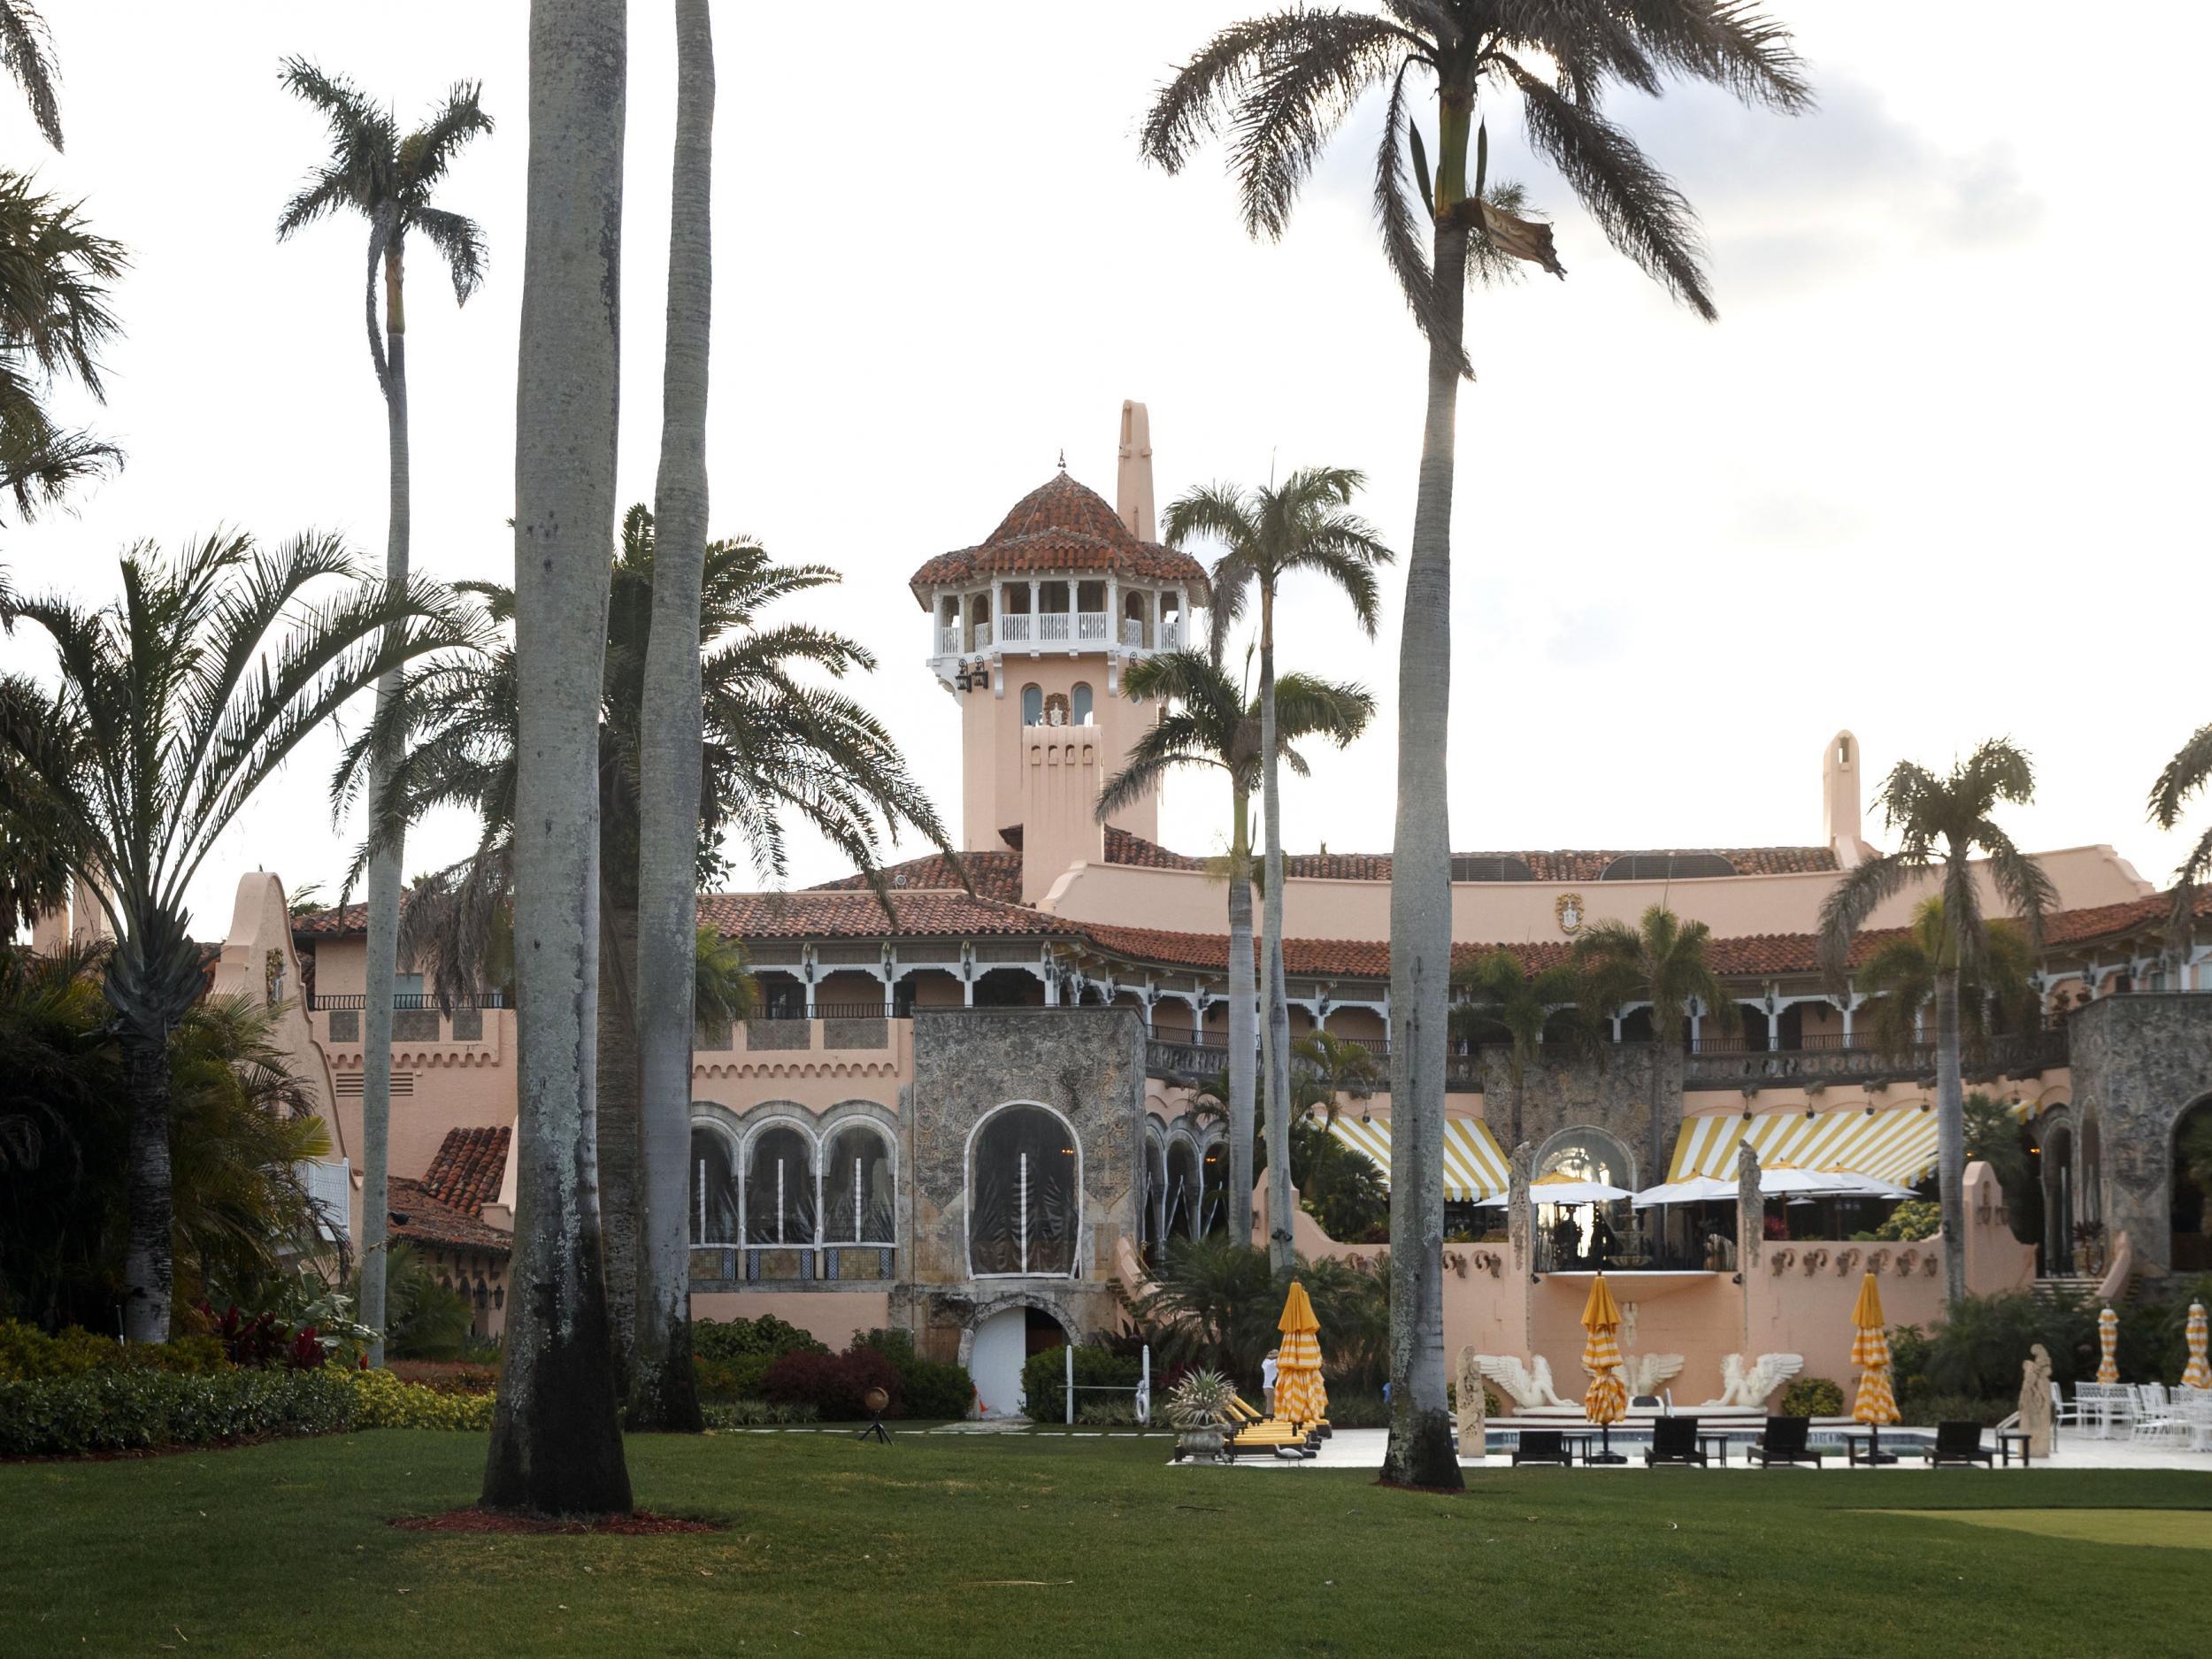 Donald Trump's Mar-a-Lago estate, Florida